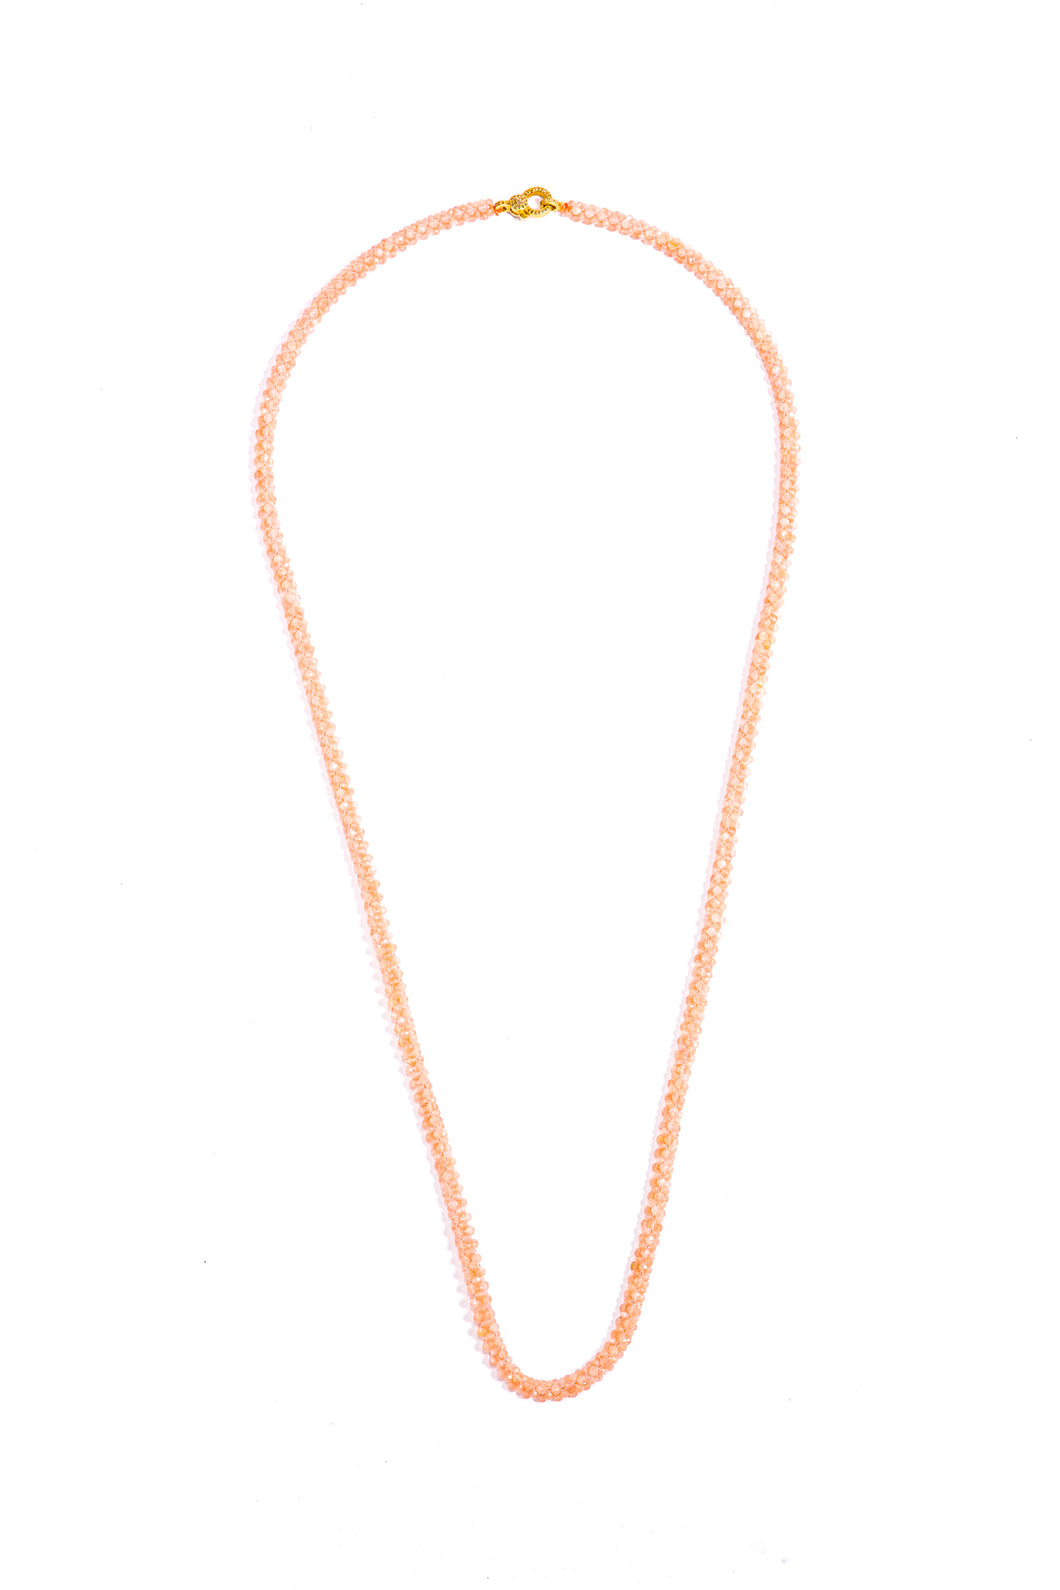 Peach Moonstone Woven Chain w/ Diamond Lobster Claw Clasp (32